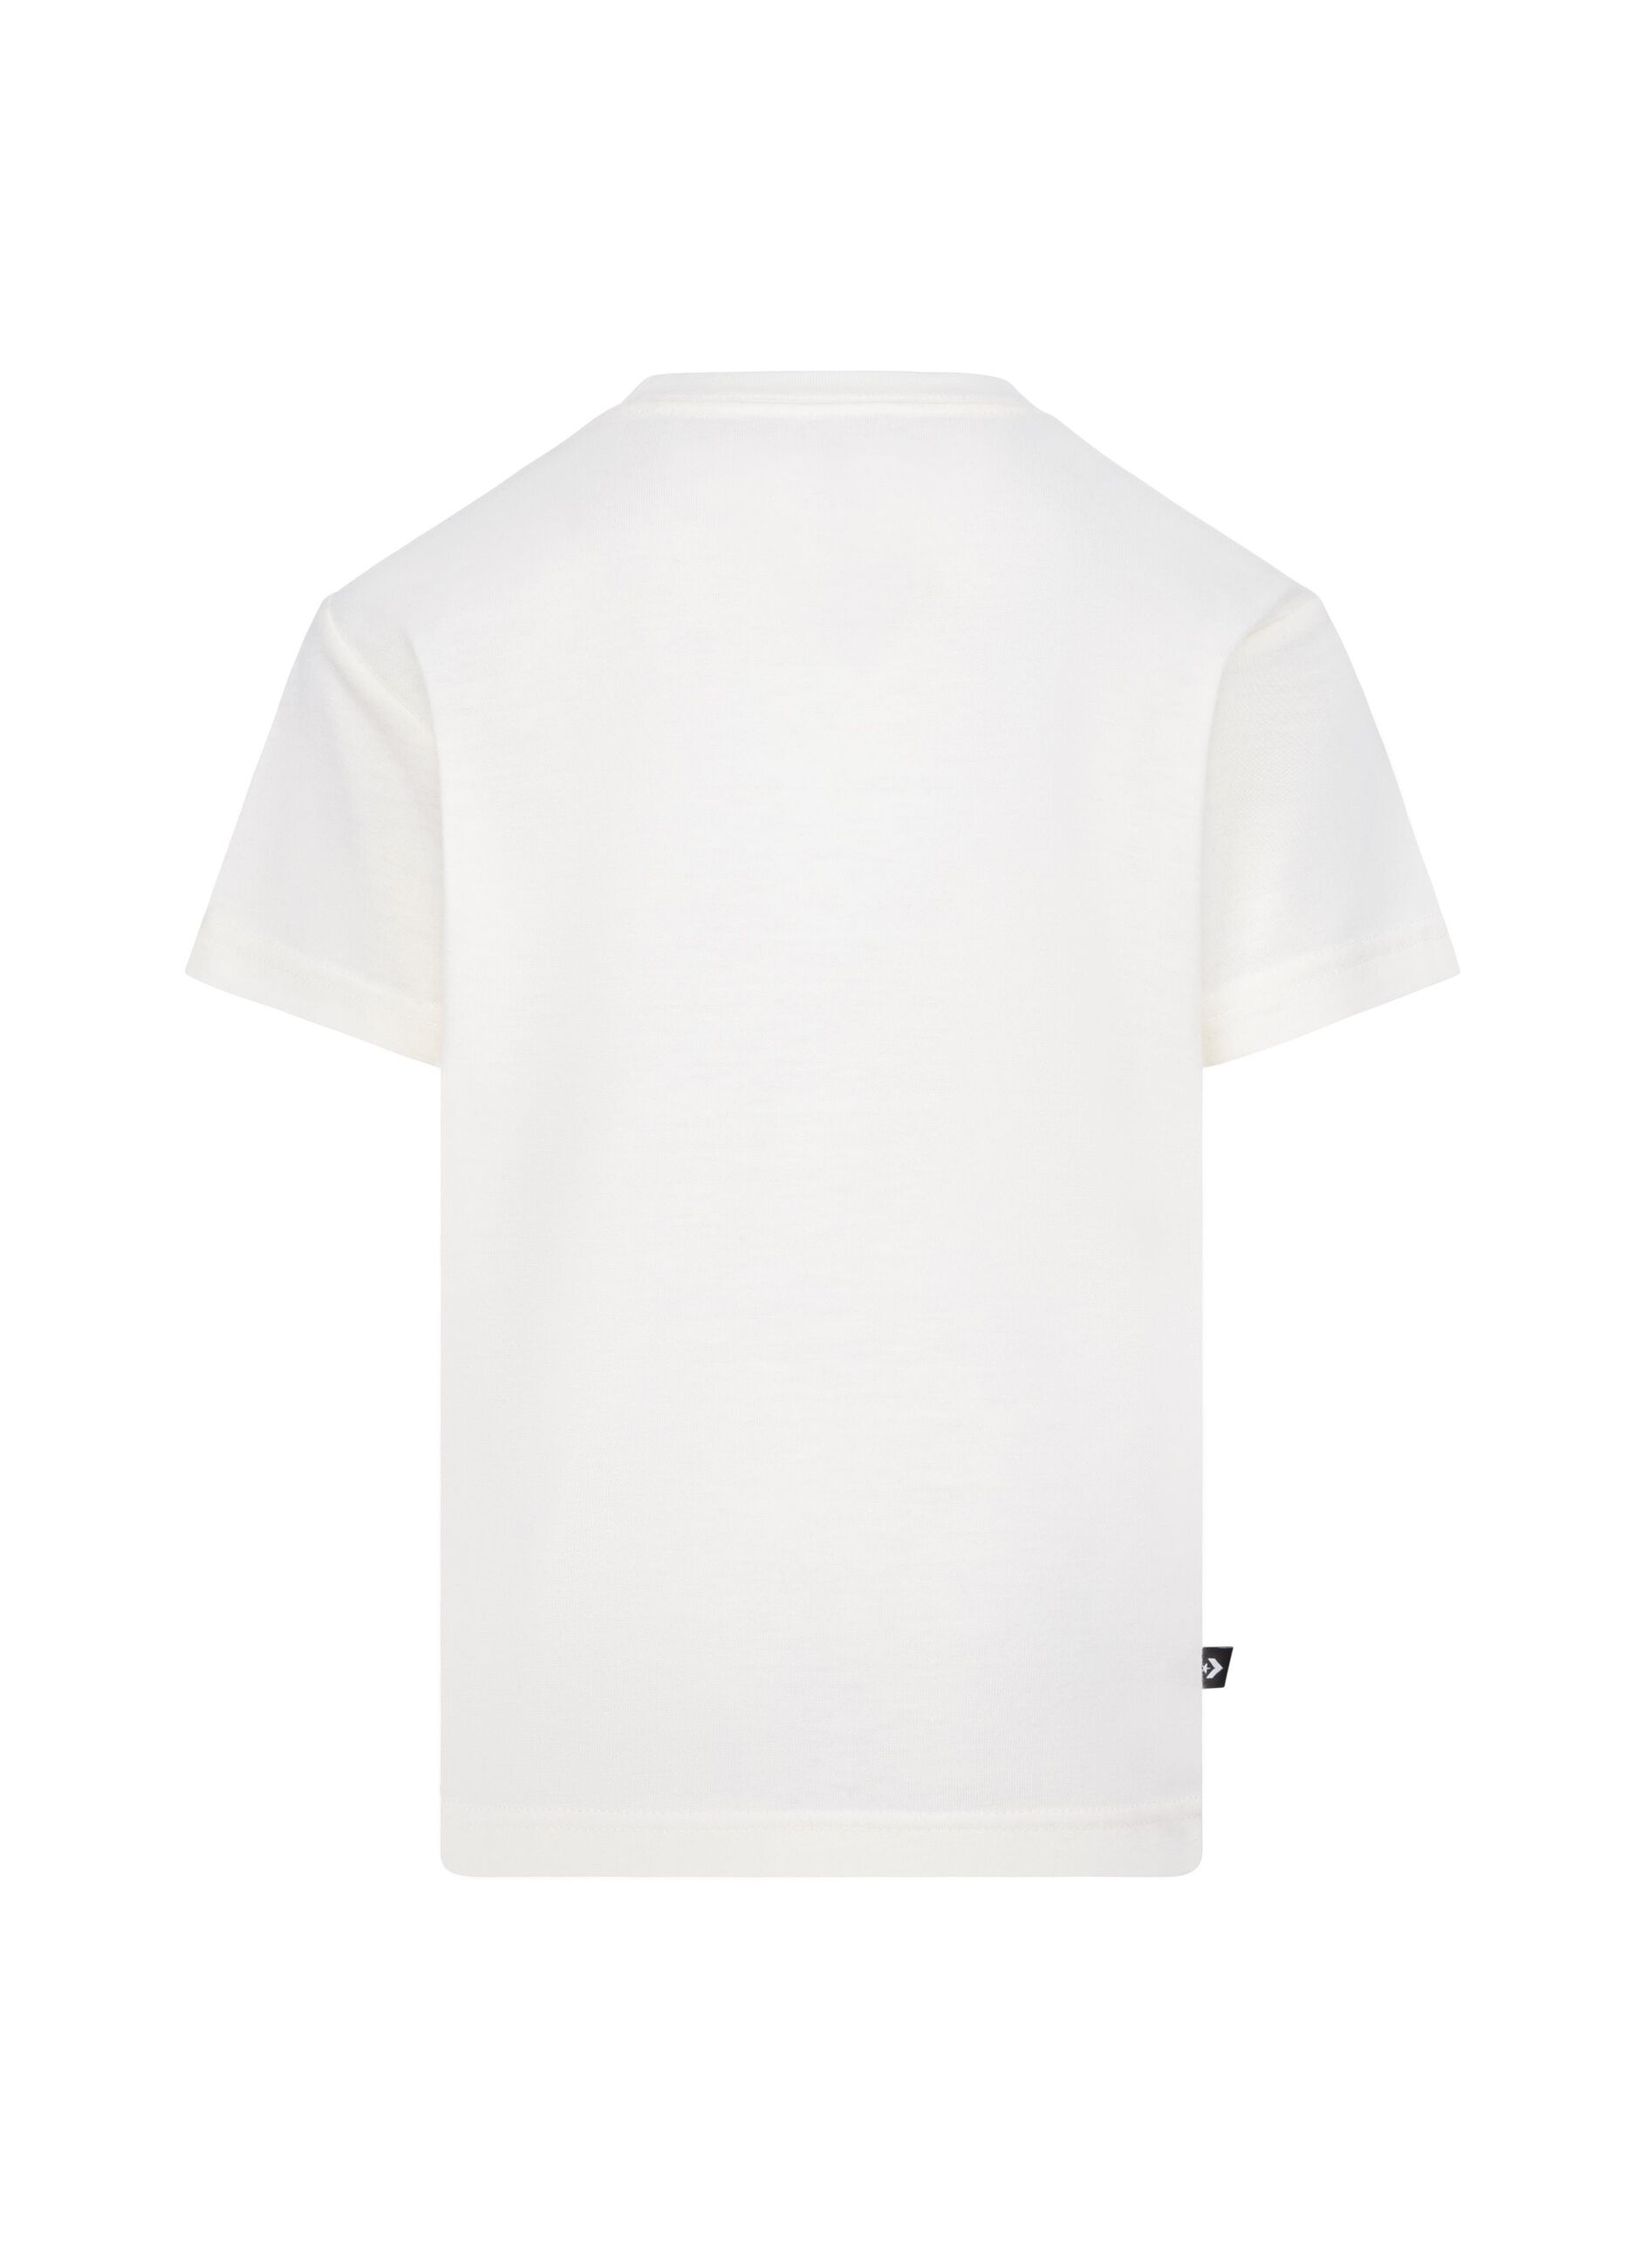 T-shirt girocollo con stampa logo Chuck Patch